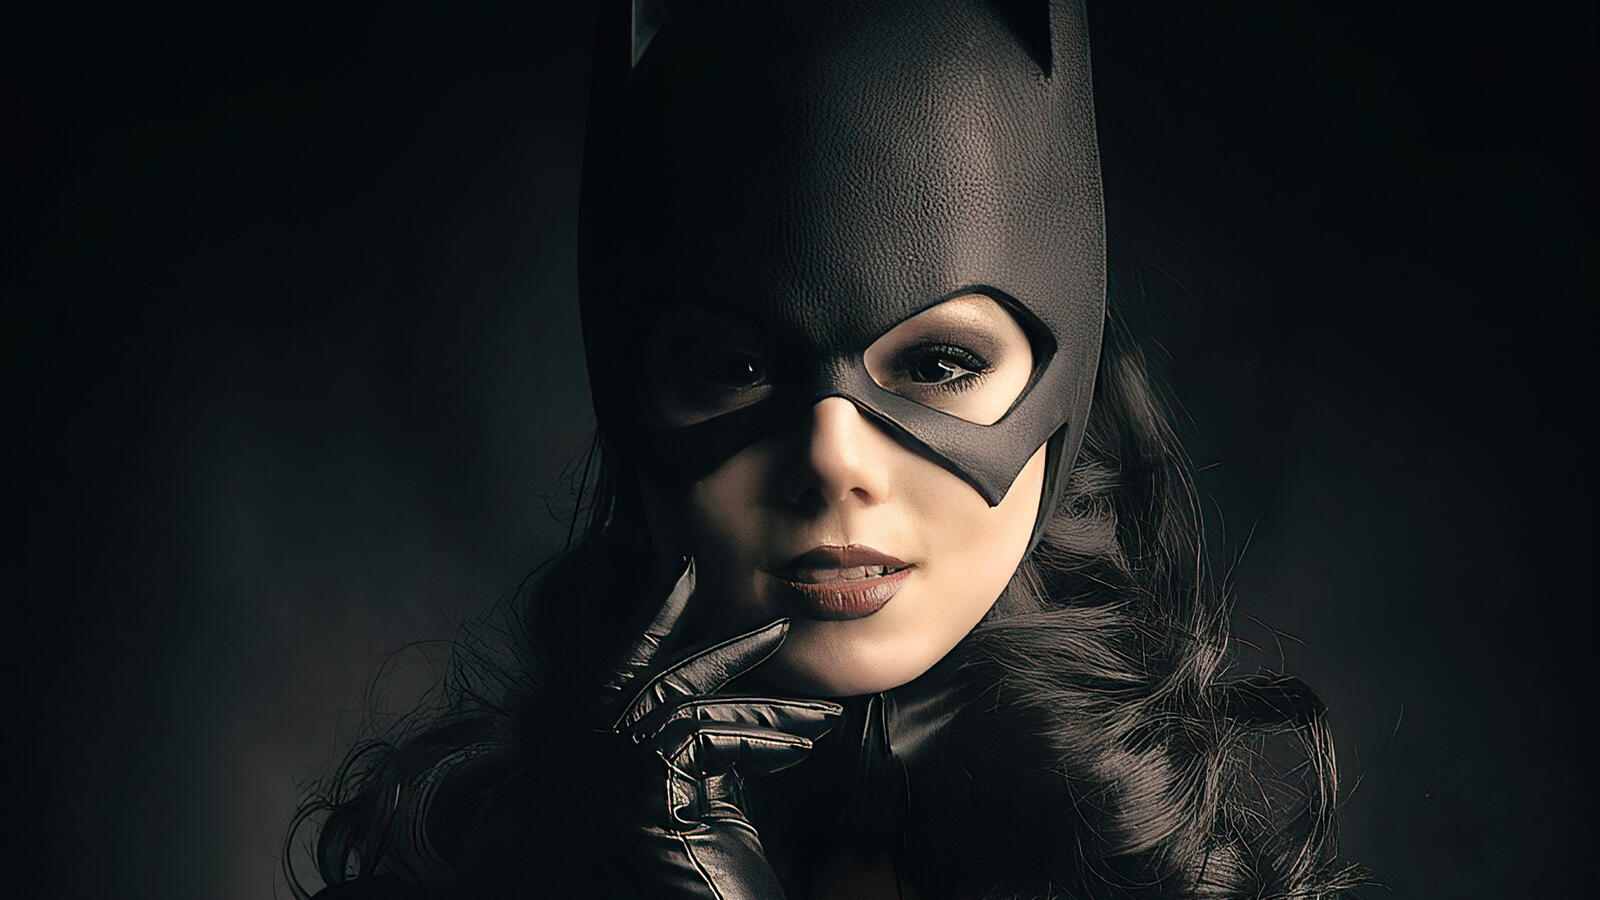 Wallpapers batgirl superheroes cosplay on the desktop